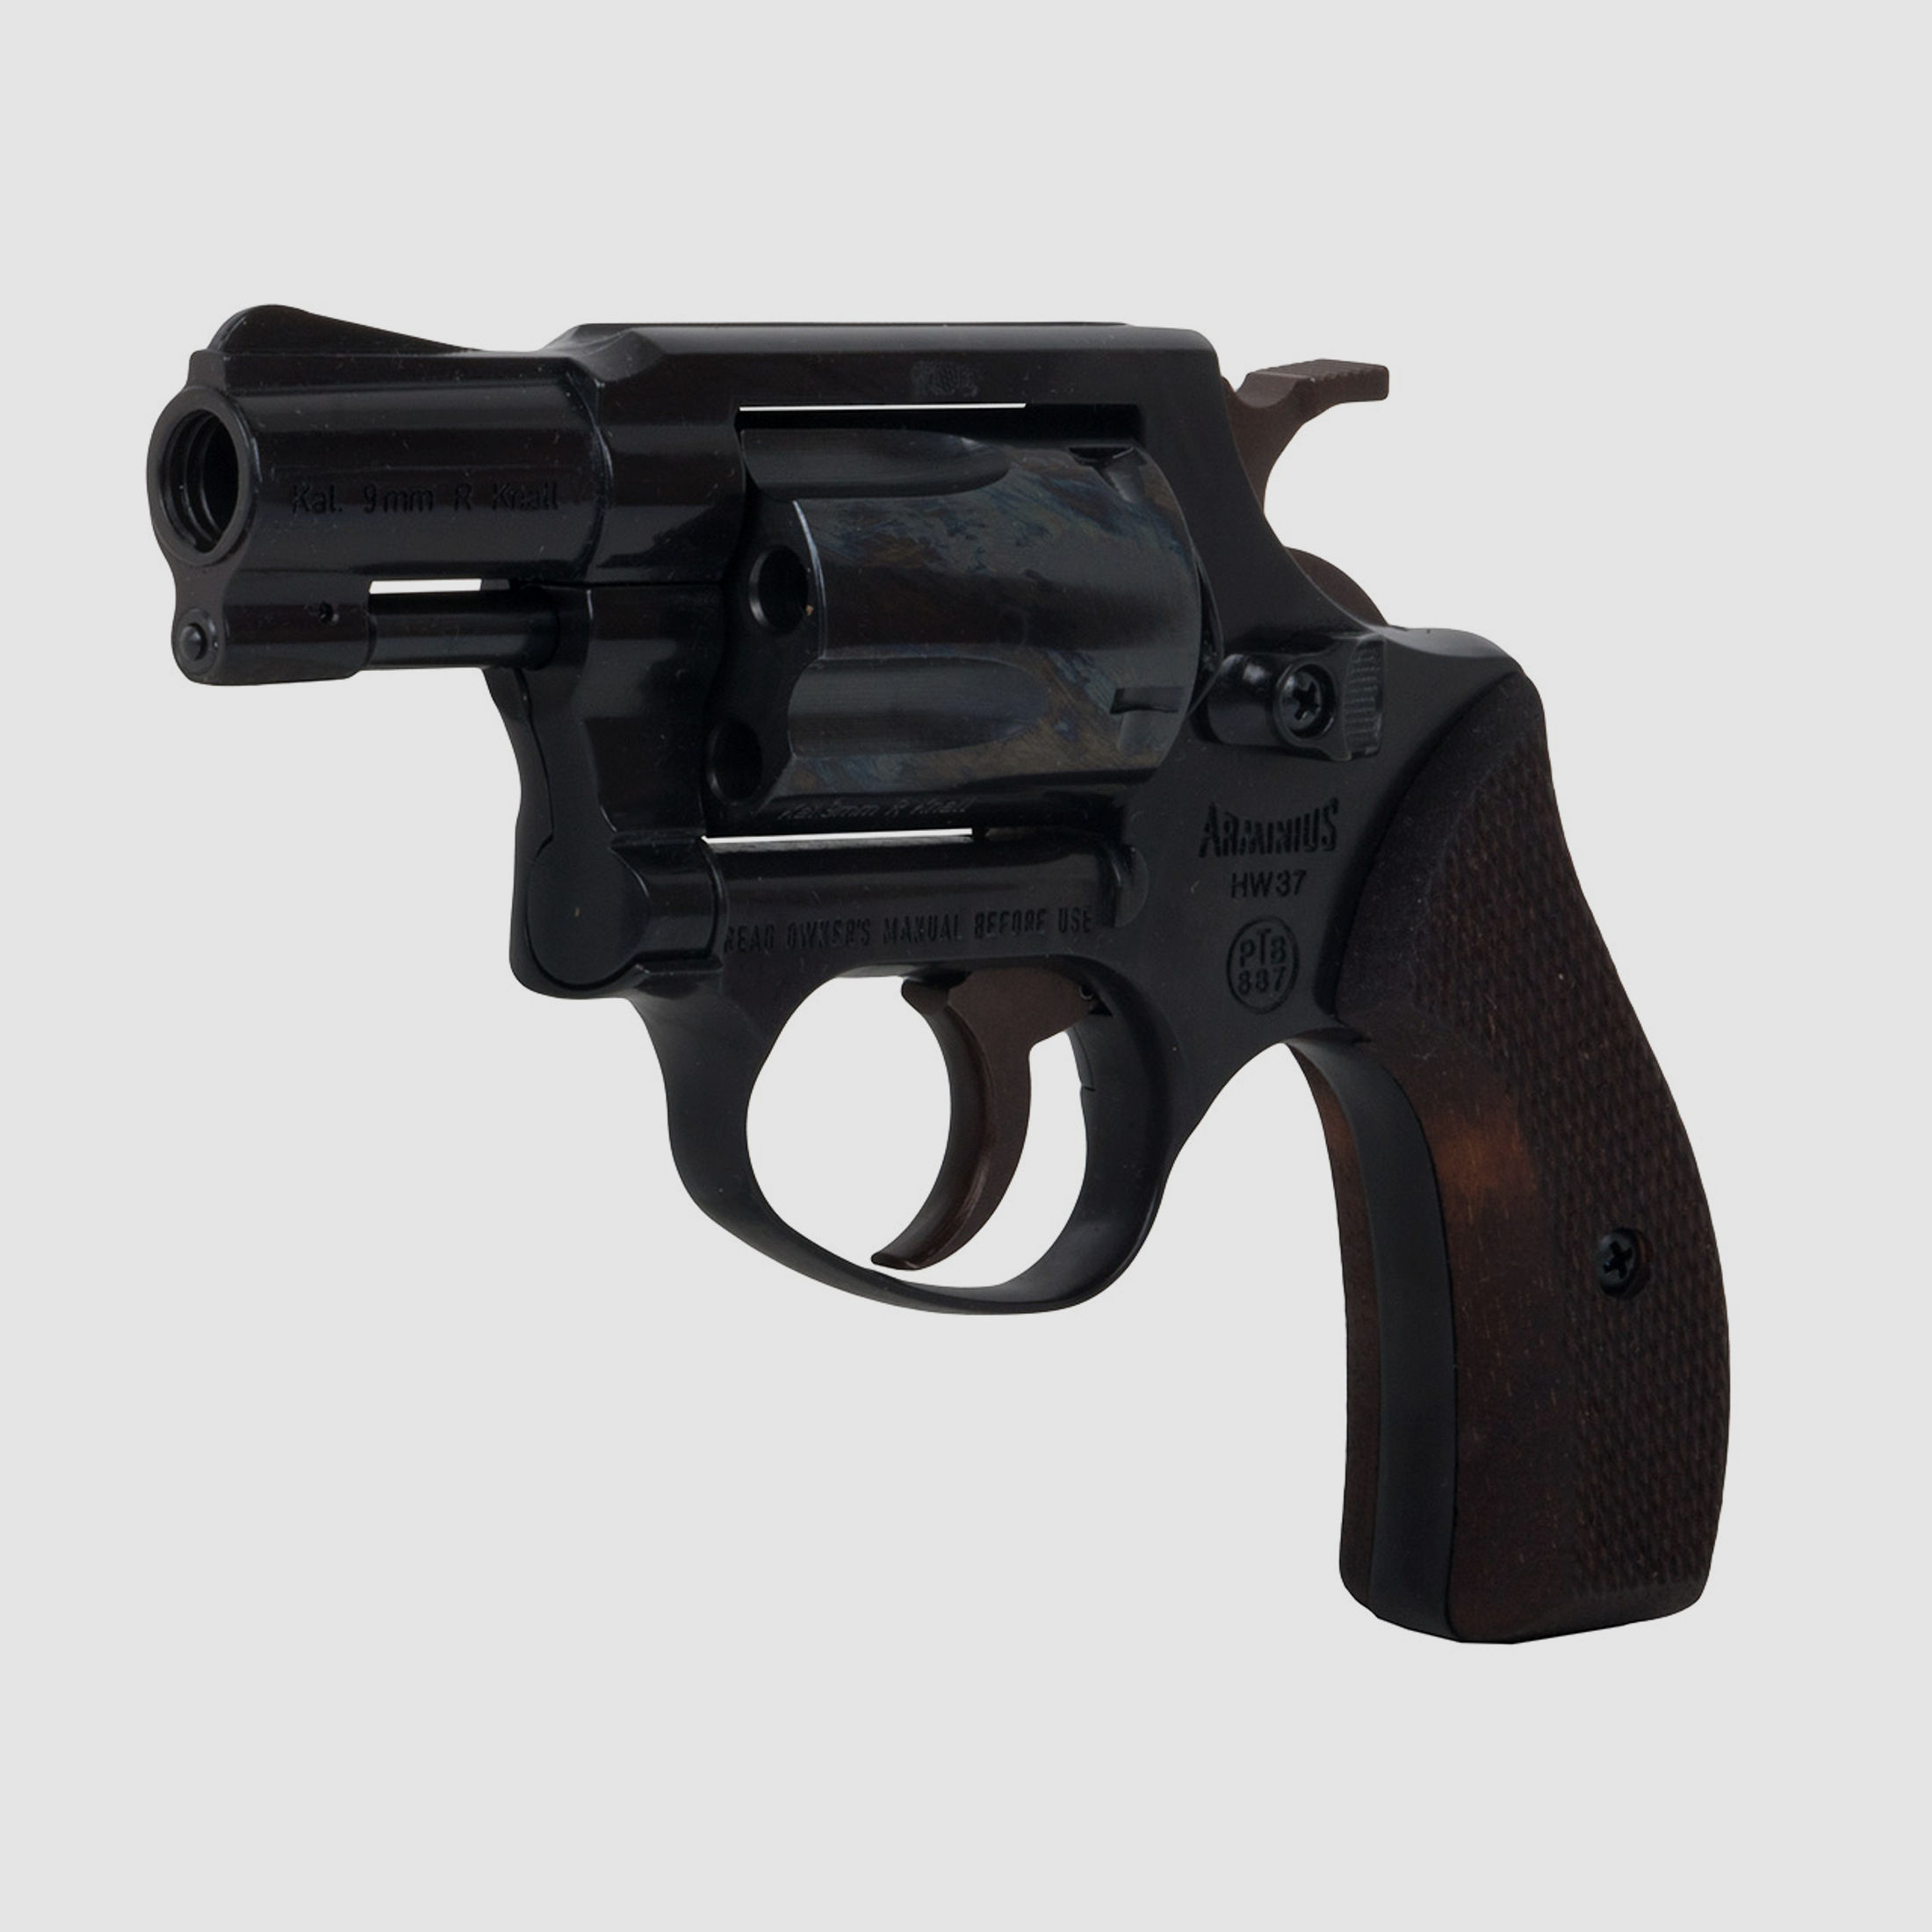 Schreckschuss Revolver Weihrauch Arminius HW 37 Holzgriffschalen Kaliber 9 mm R.K. (P18) + 50 Schuss